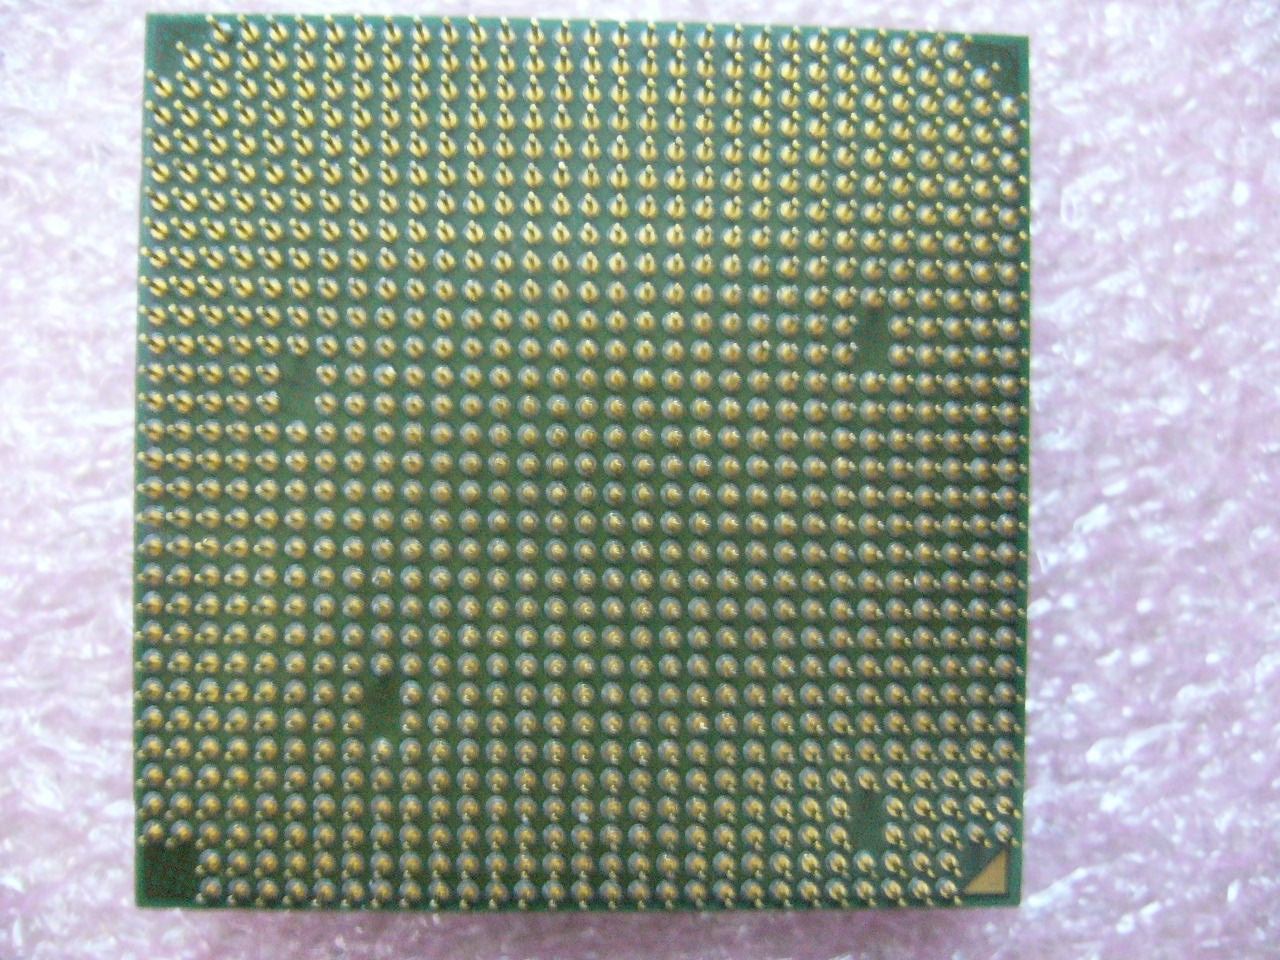 QTY 1x AMD Athlon 64 X2 4400+ 2.2 GHz Dual-Core (ADA4400DAA6CD) CPU 939-Pin - zum Schließen ins Bild klicken